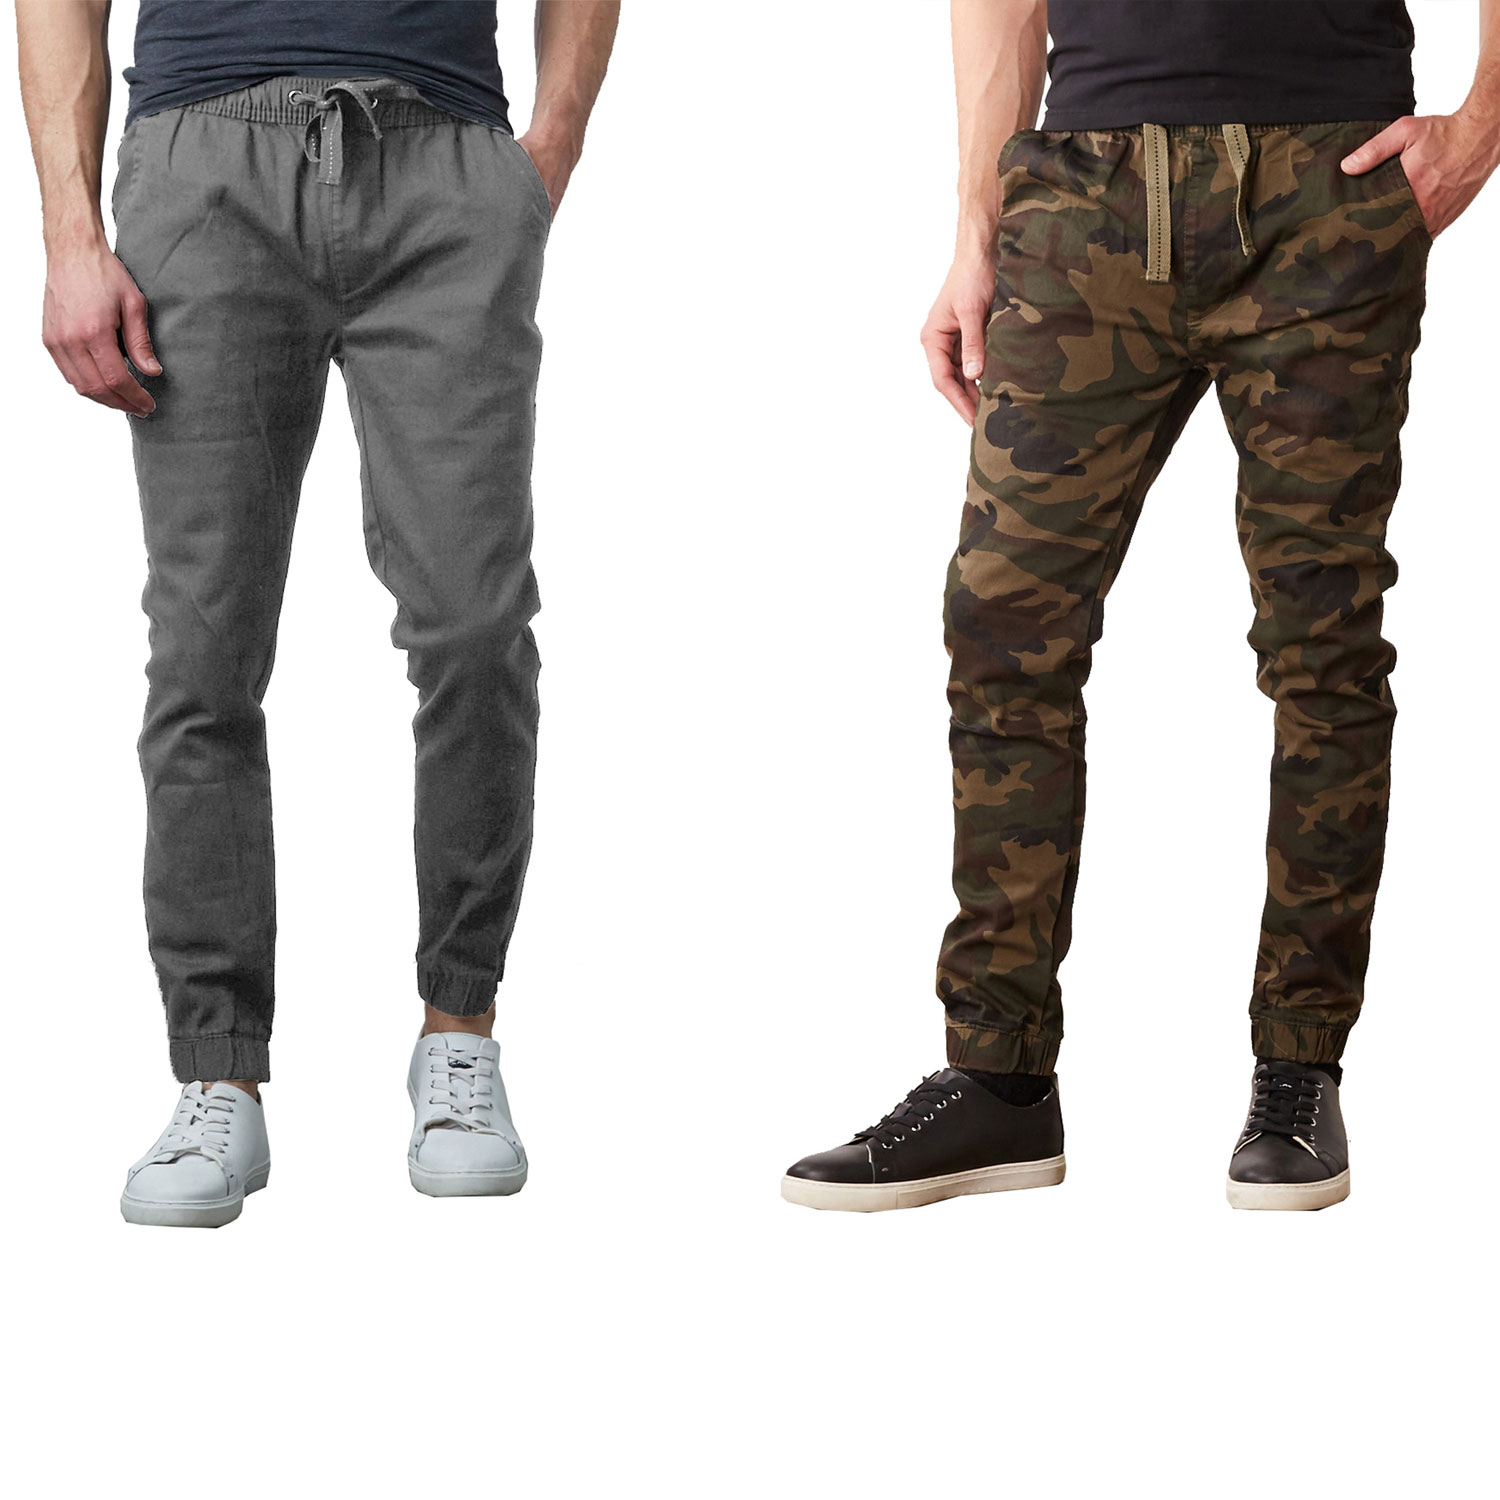 Men's Jogger Pants Slim-fit Cotton Twill  - 2 Pack